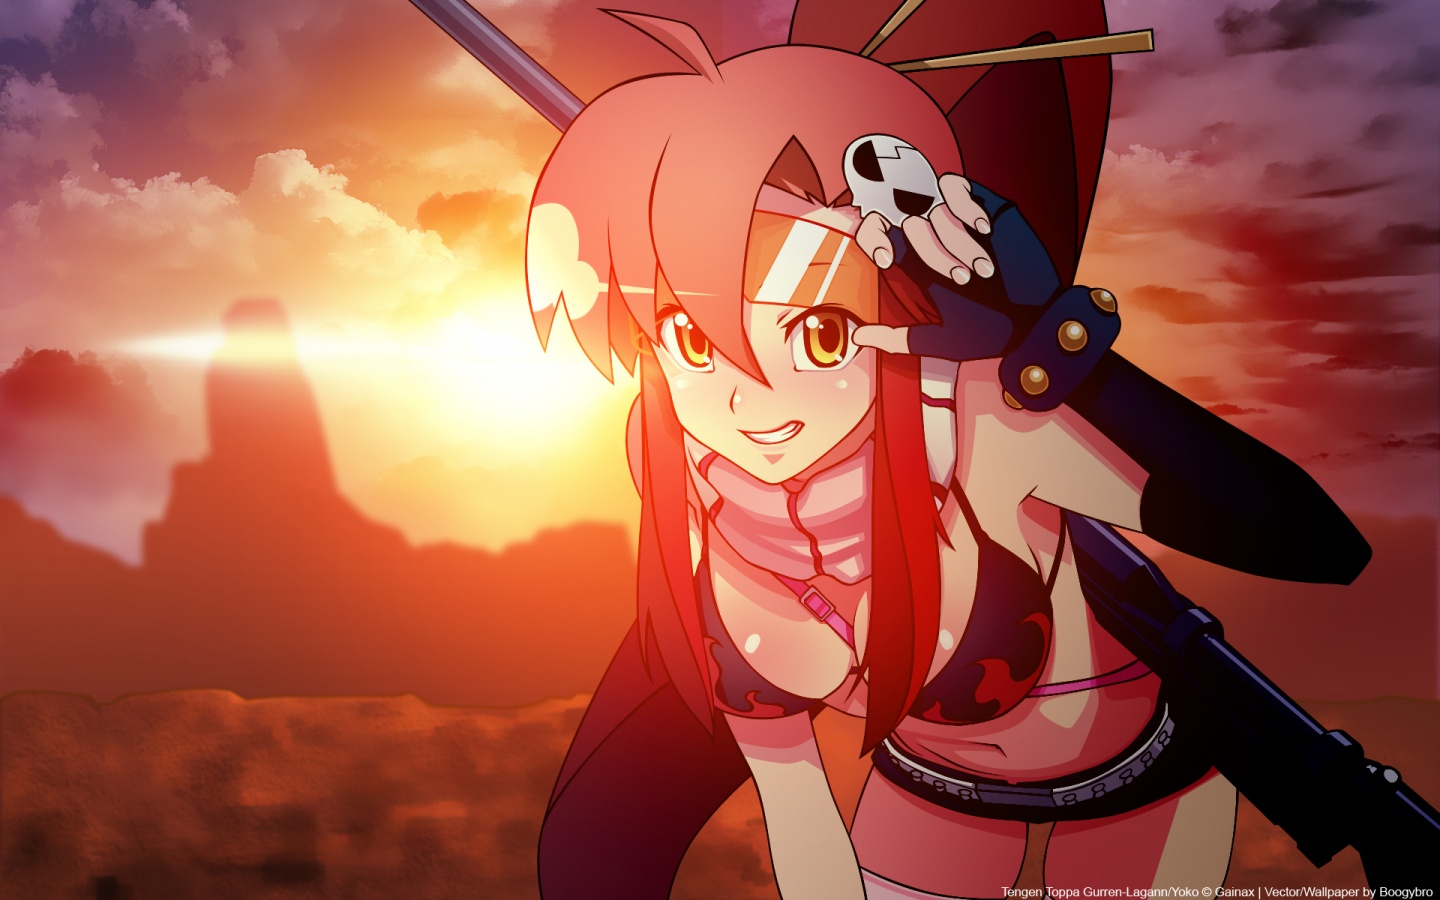 Cute Fighter Anime girl